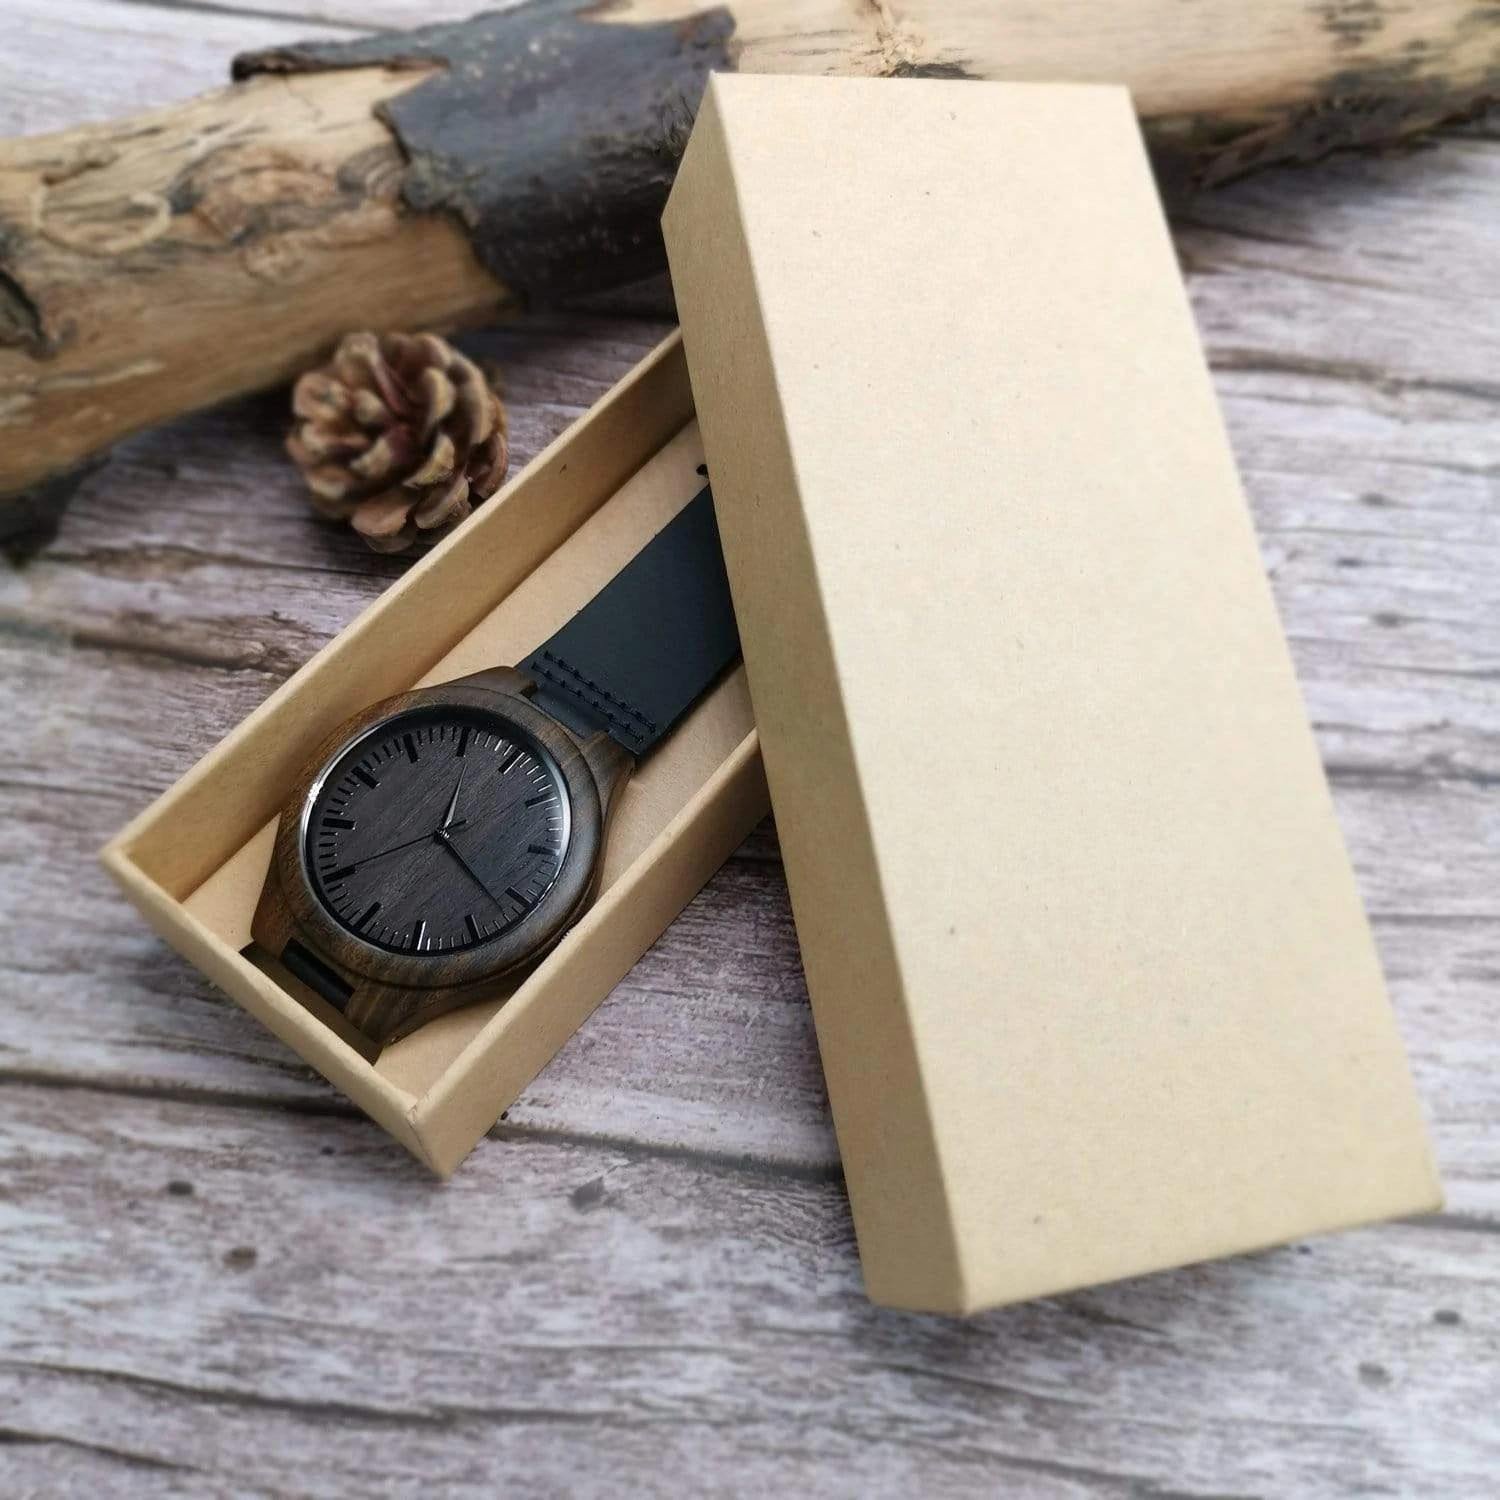 Gift For Boyfriend I Found My Missing Piece Engraved Wooden Watch